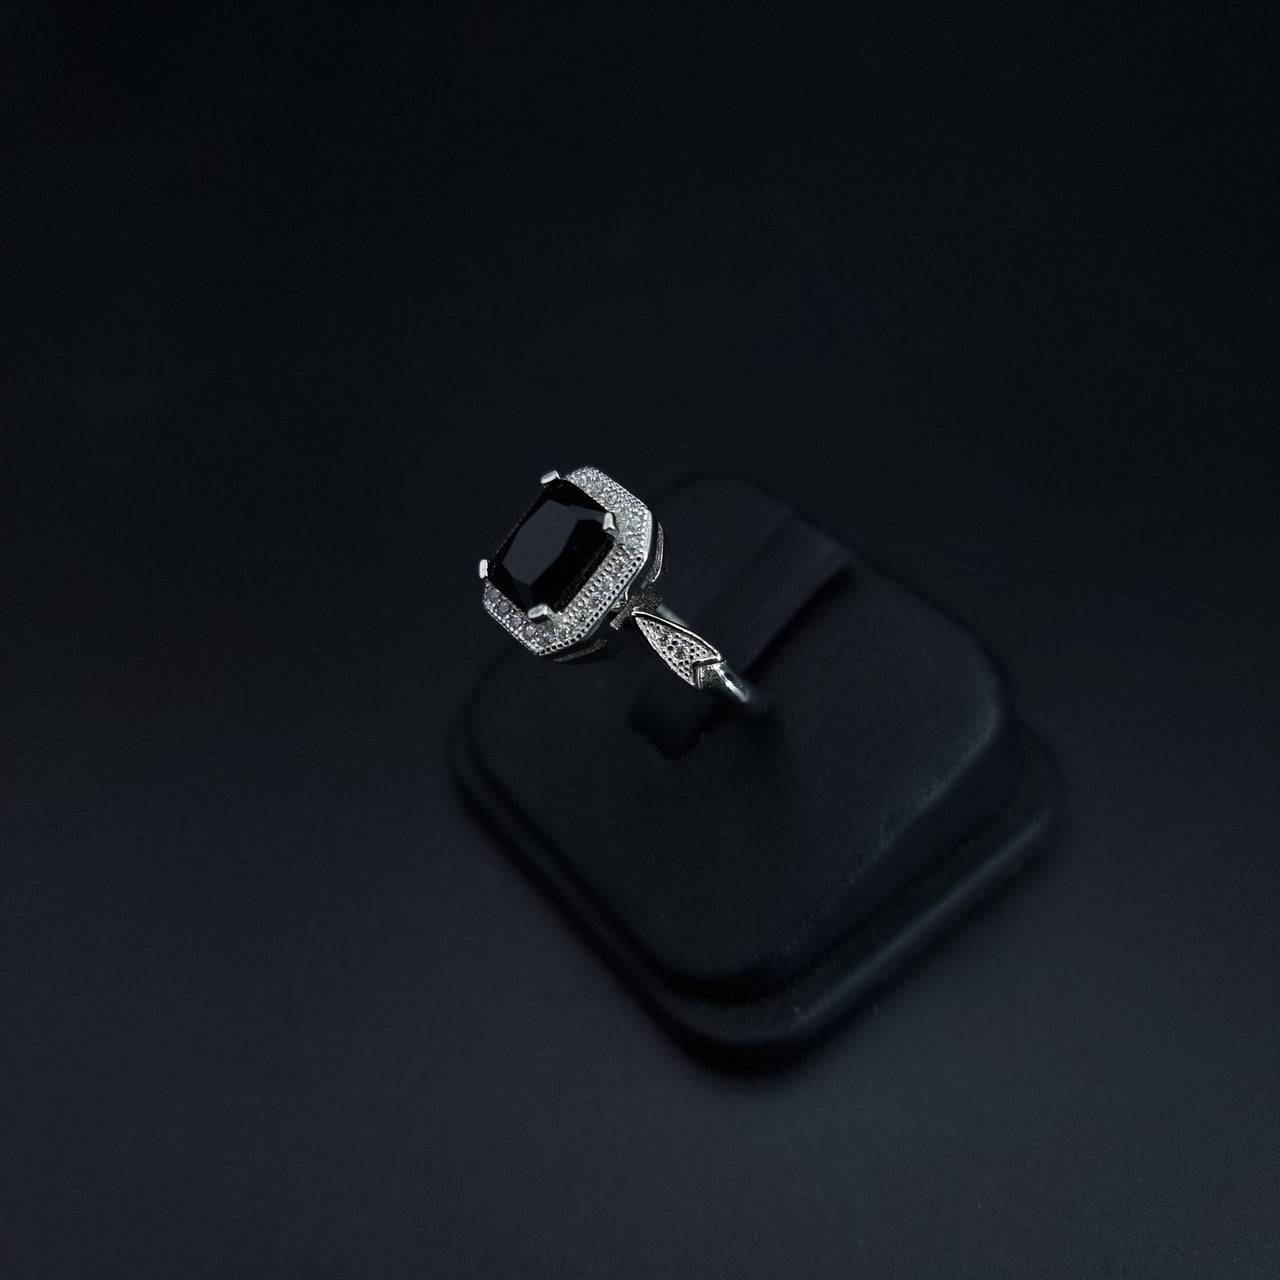 Black Zircon Stone Ring